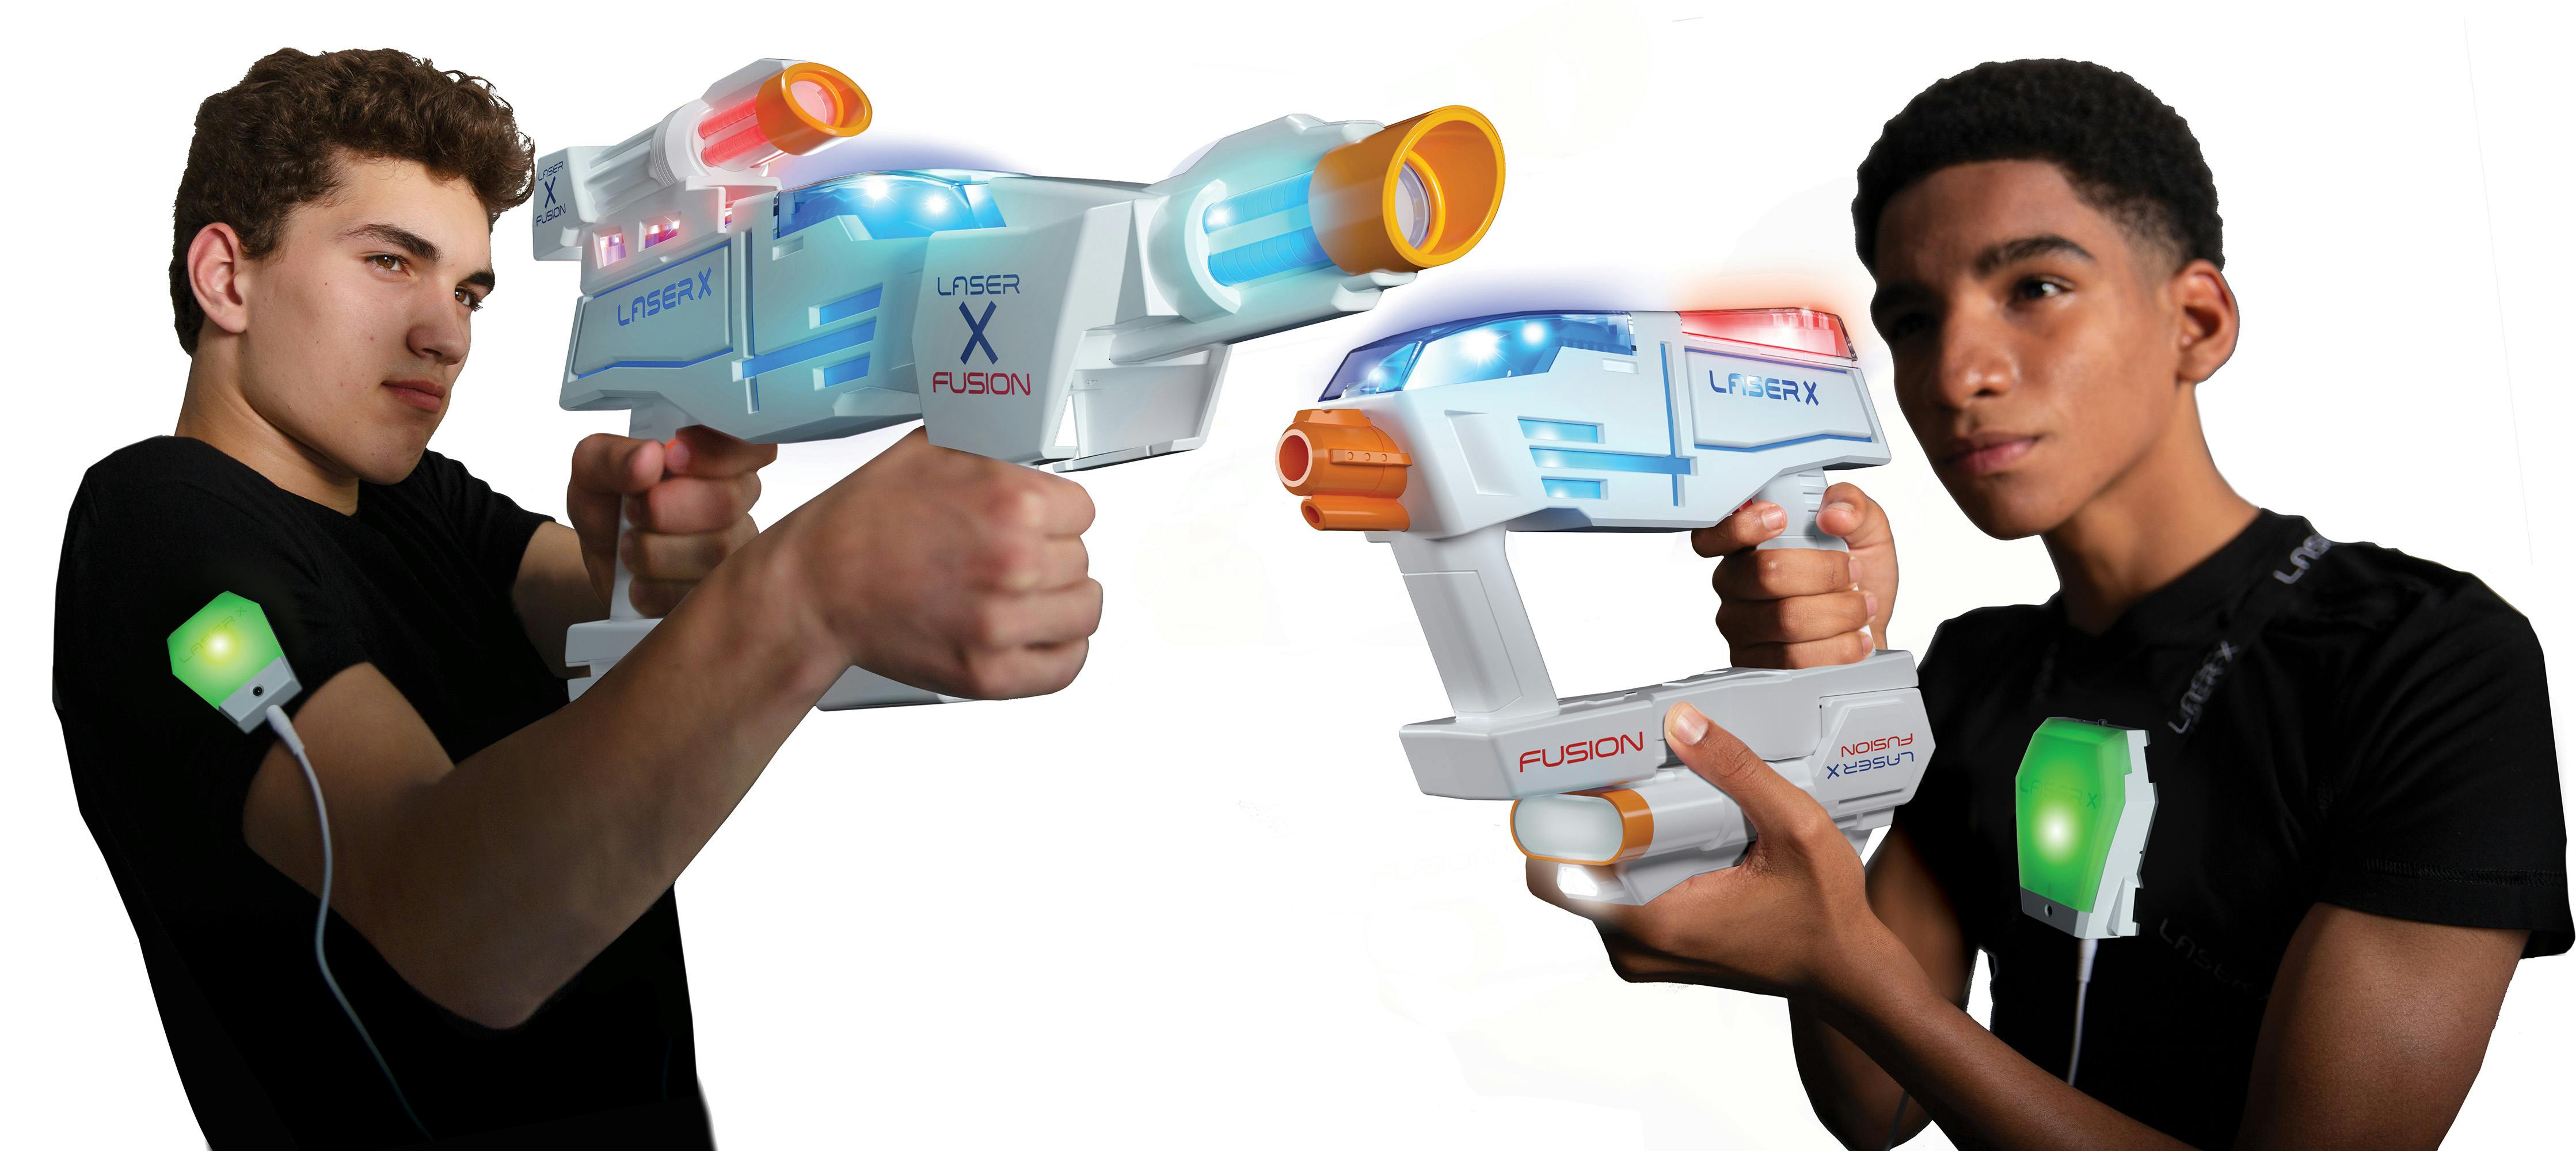 laser tag toys walmart